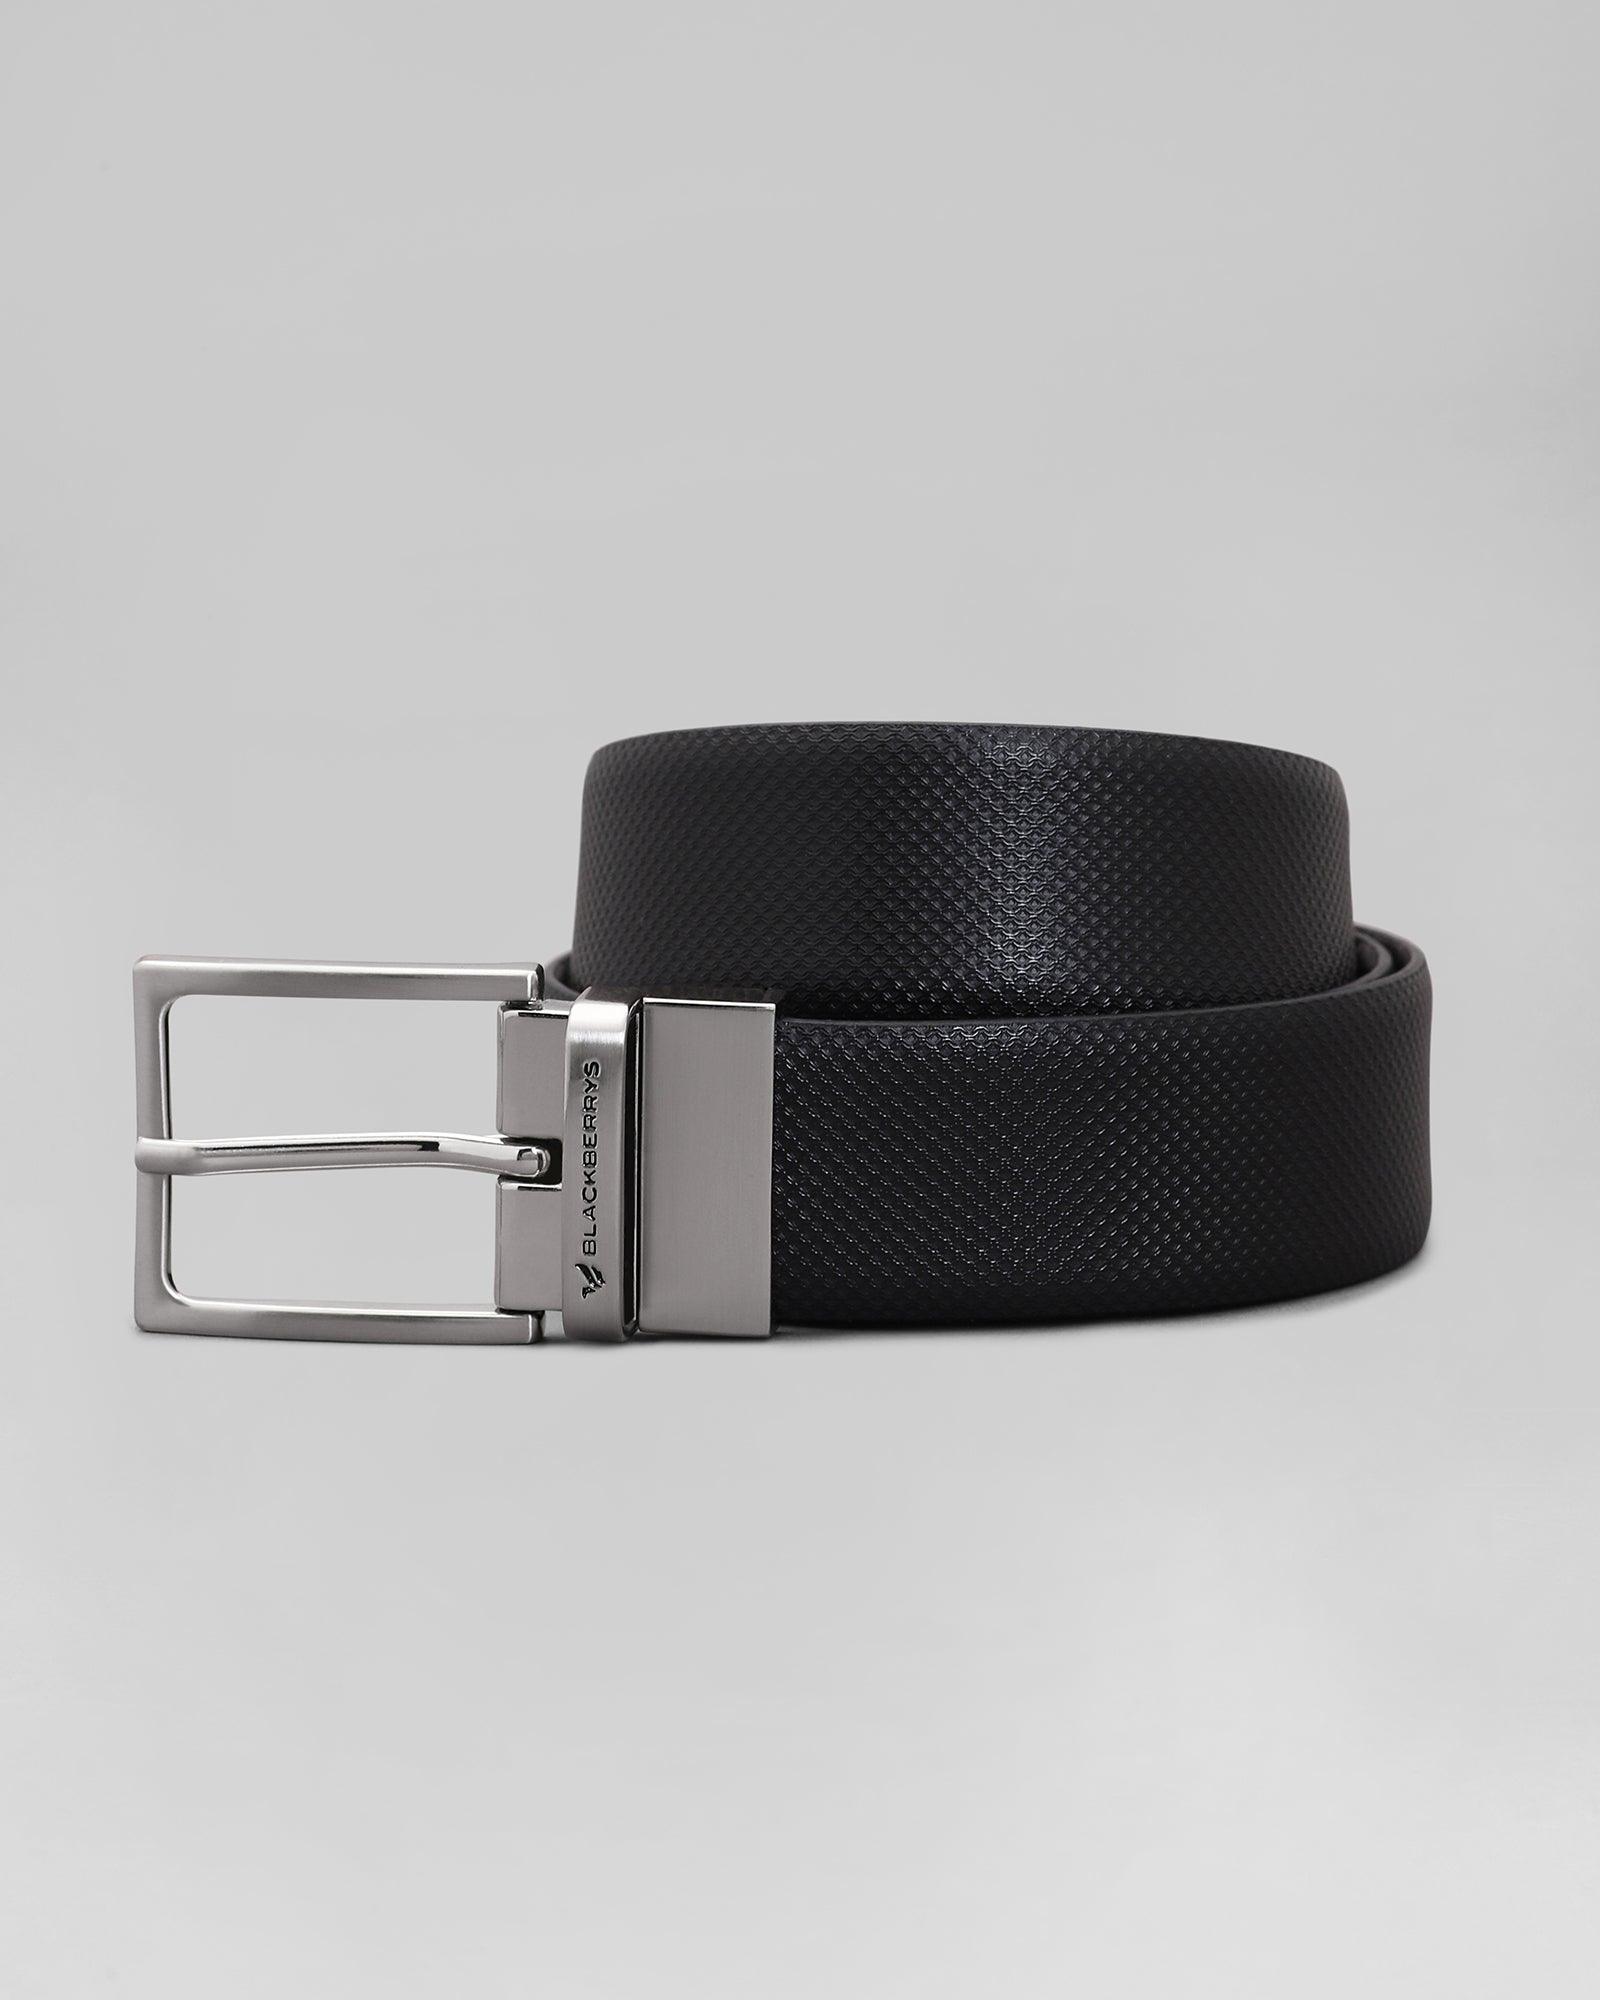 Leather Reversible Black Brown Printed Belt - Parrot